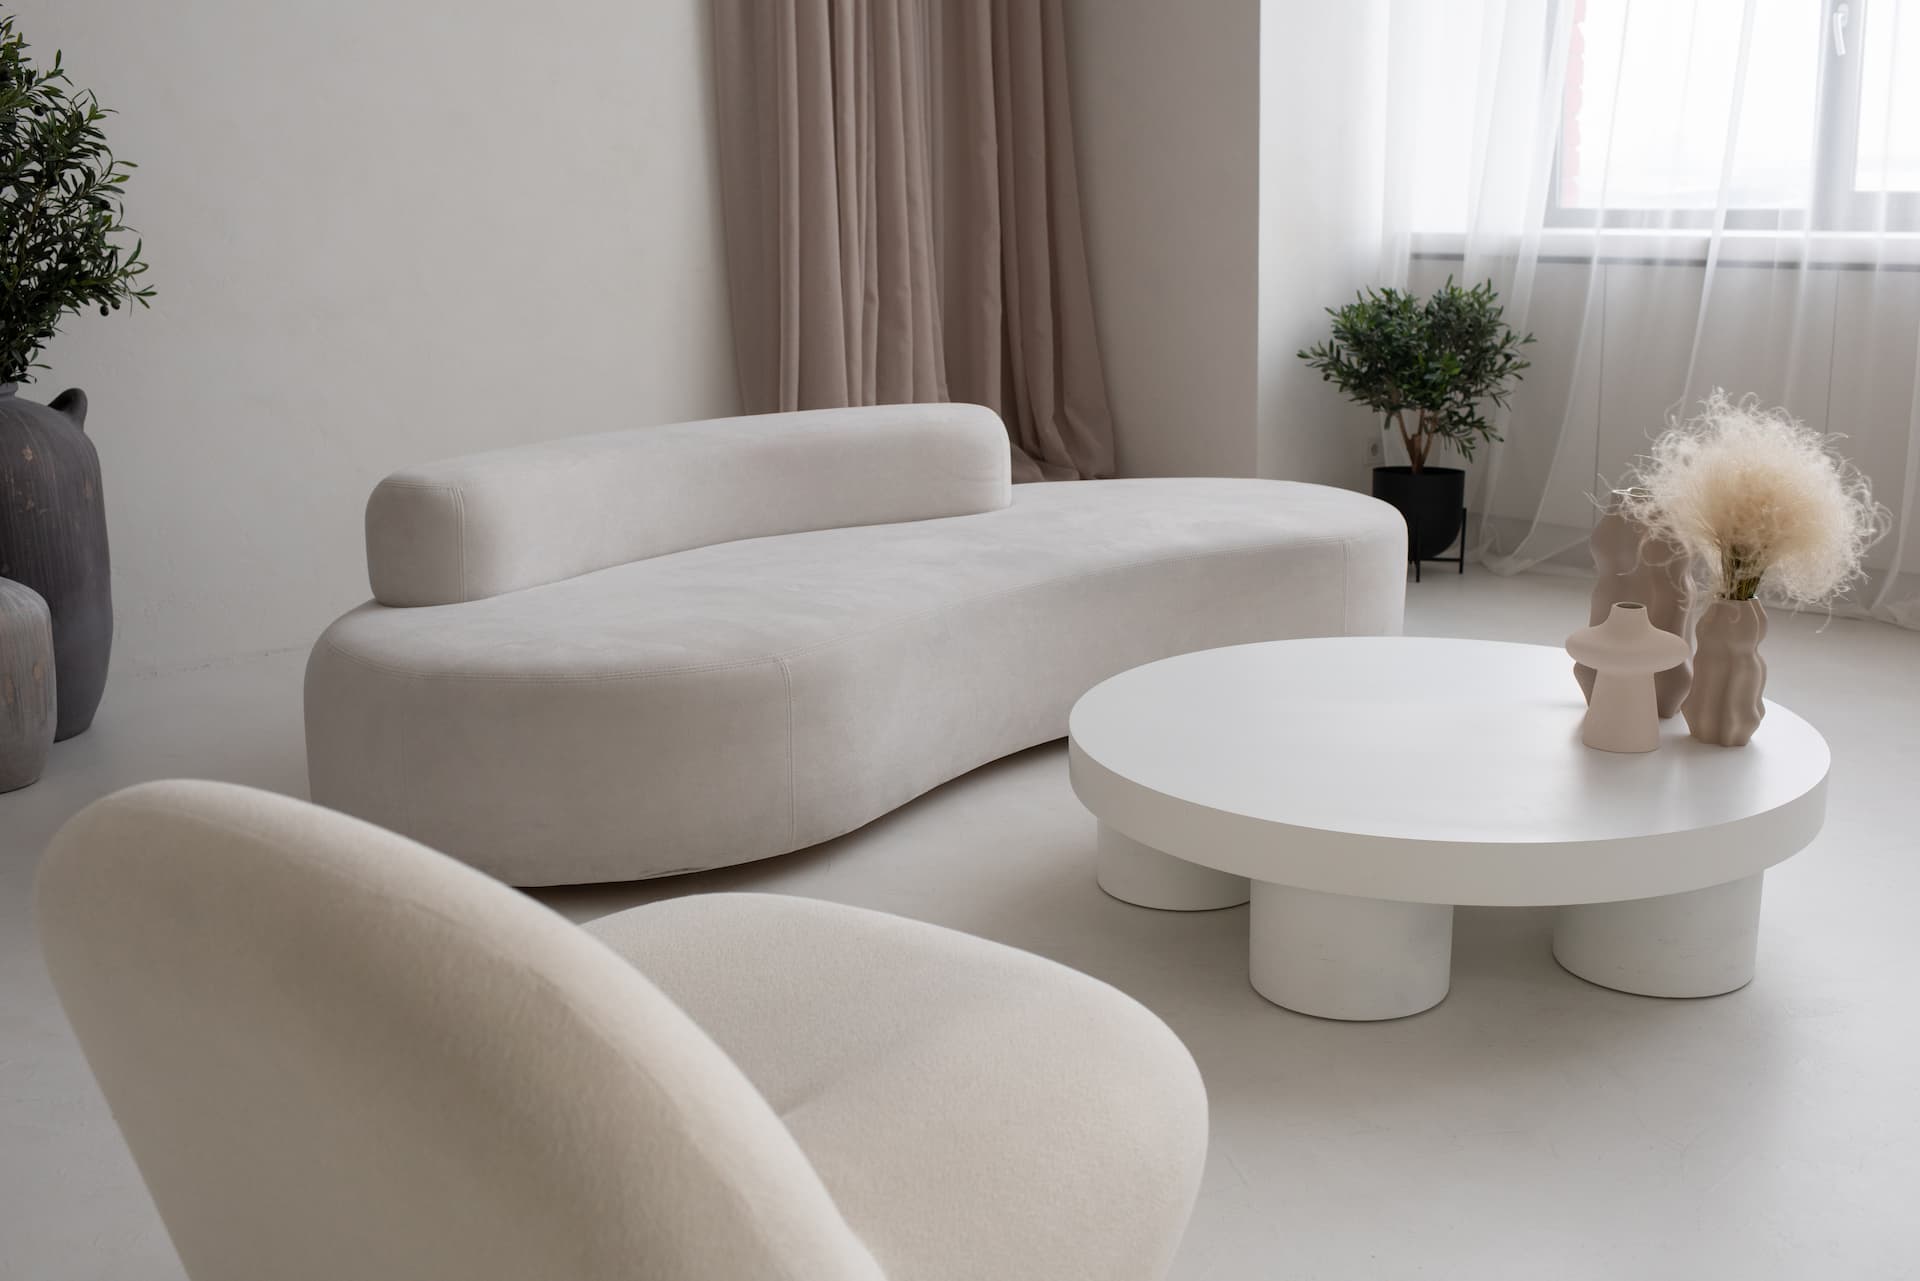 grand-salon-canape-confortable-blanc-fauteuil (1)